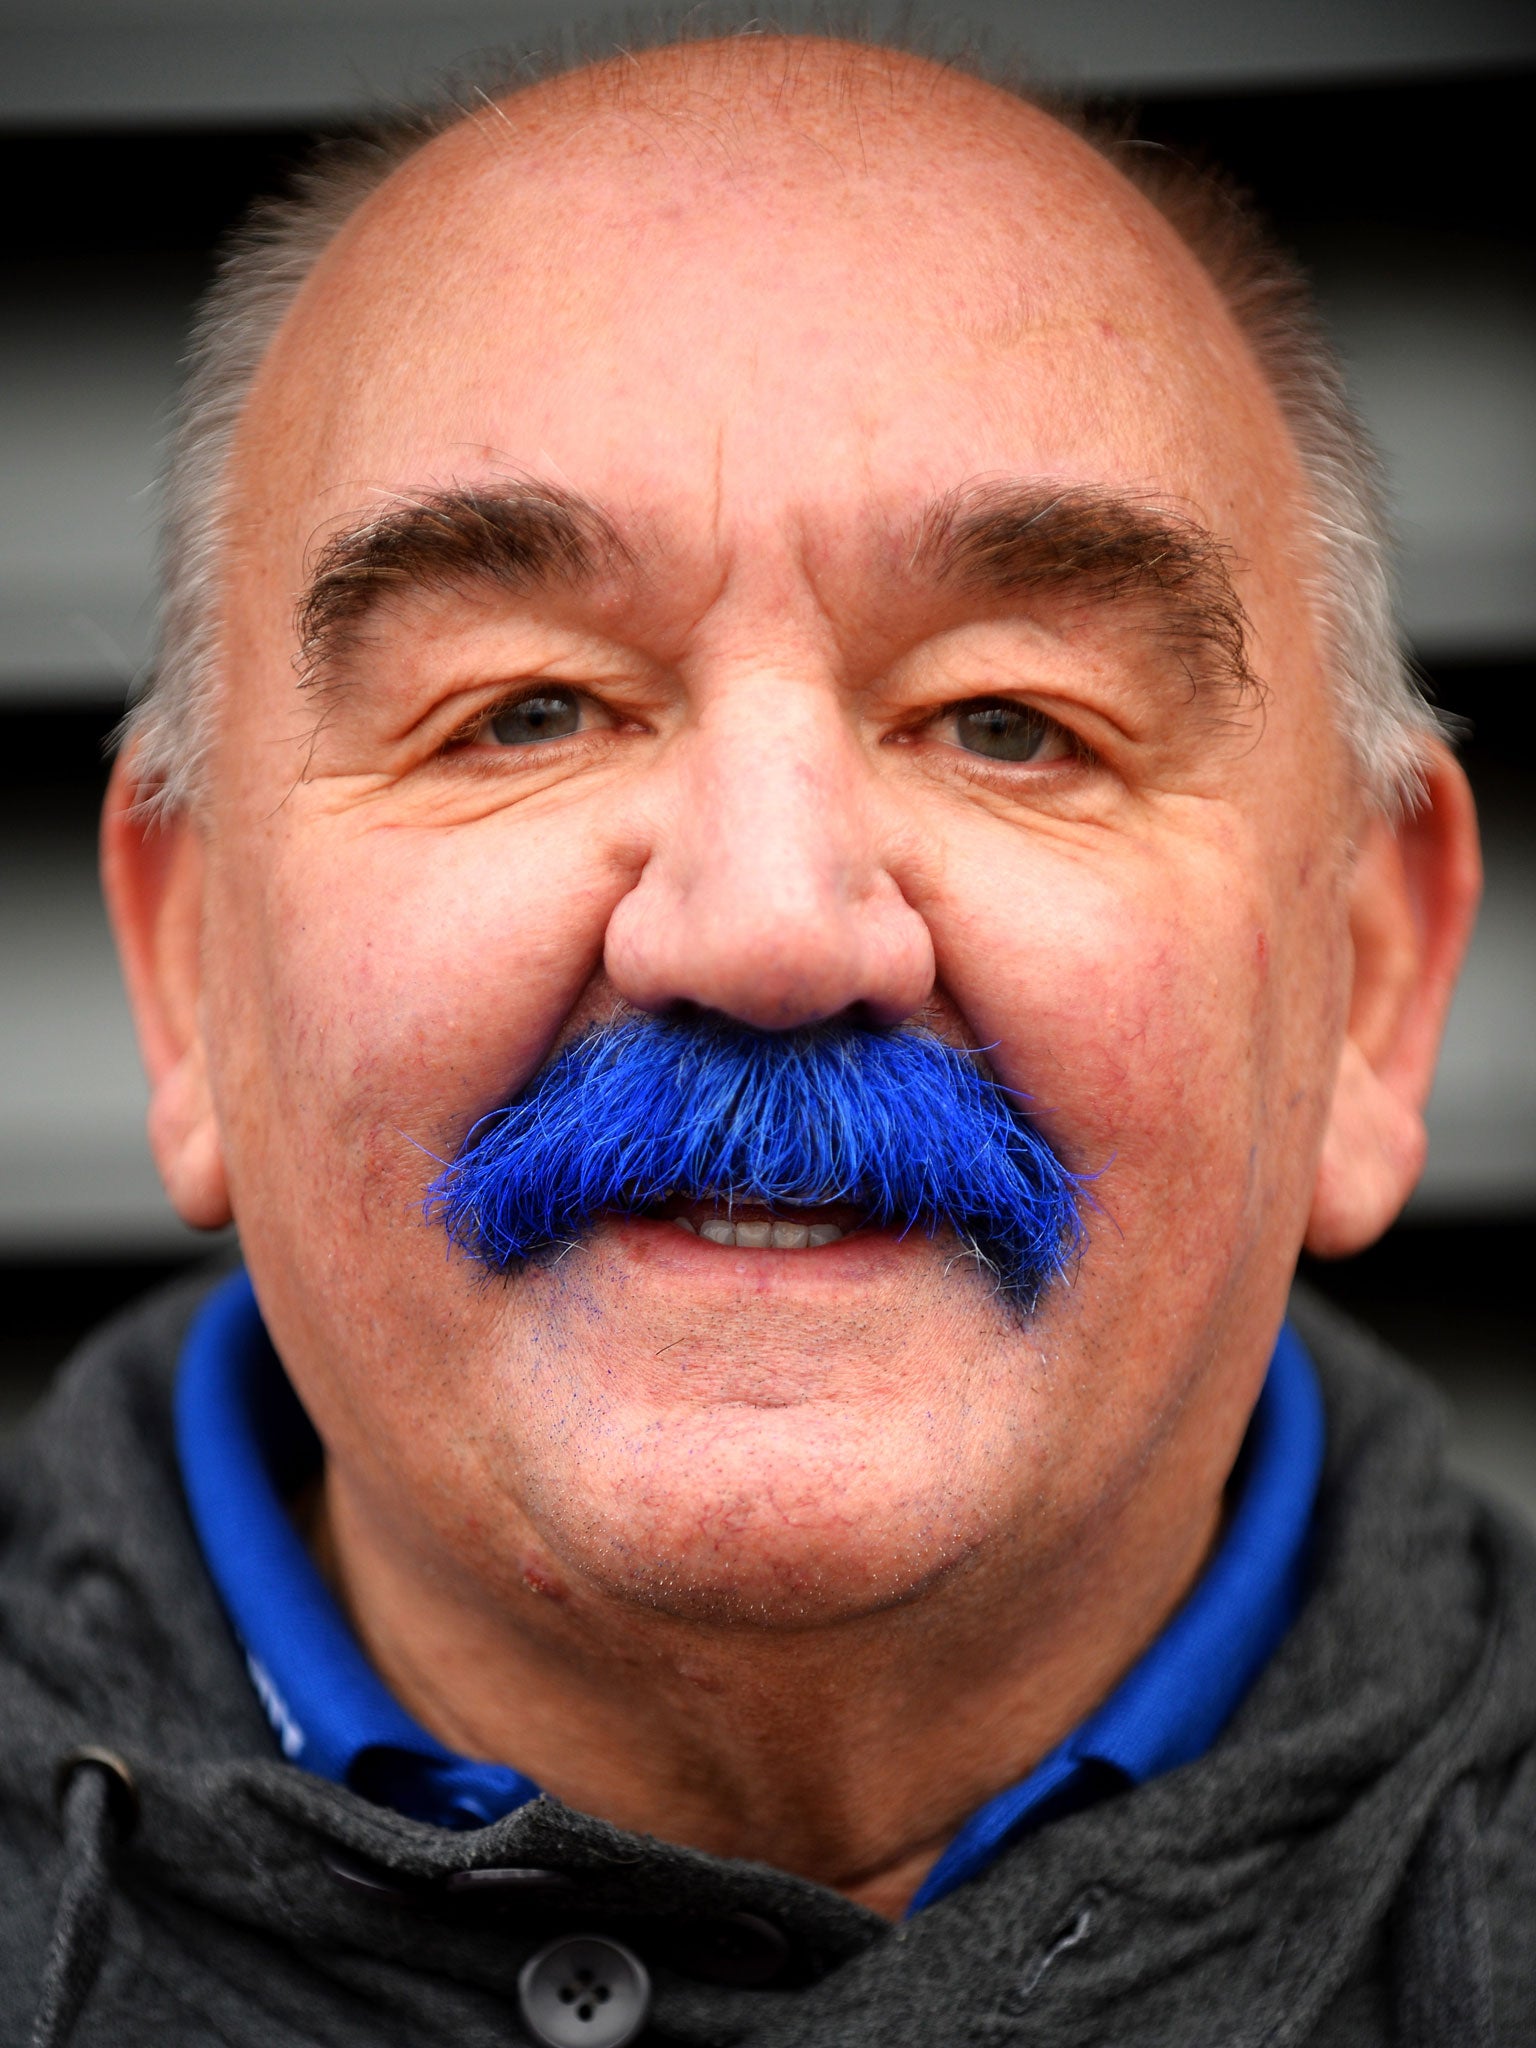 A Cardiff City fan shows of his 'blue moustache'